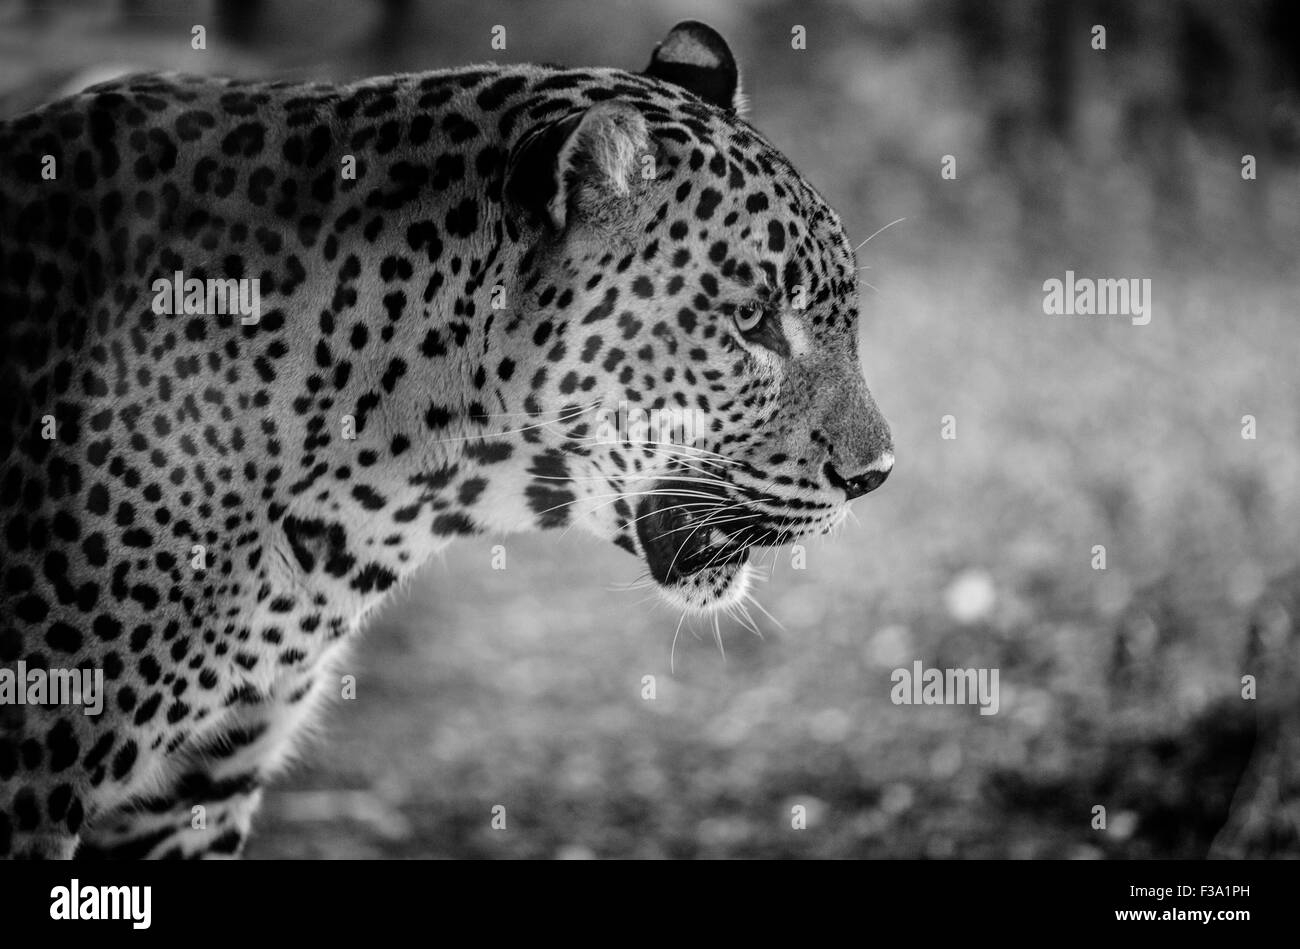 Close up of magnificent big cat Sri Lankan leopard. Black and white portrait Stock Photo